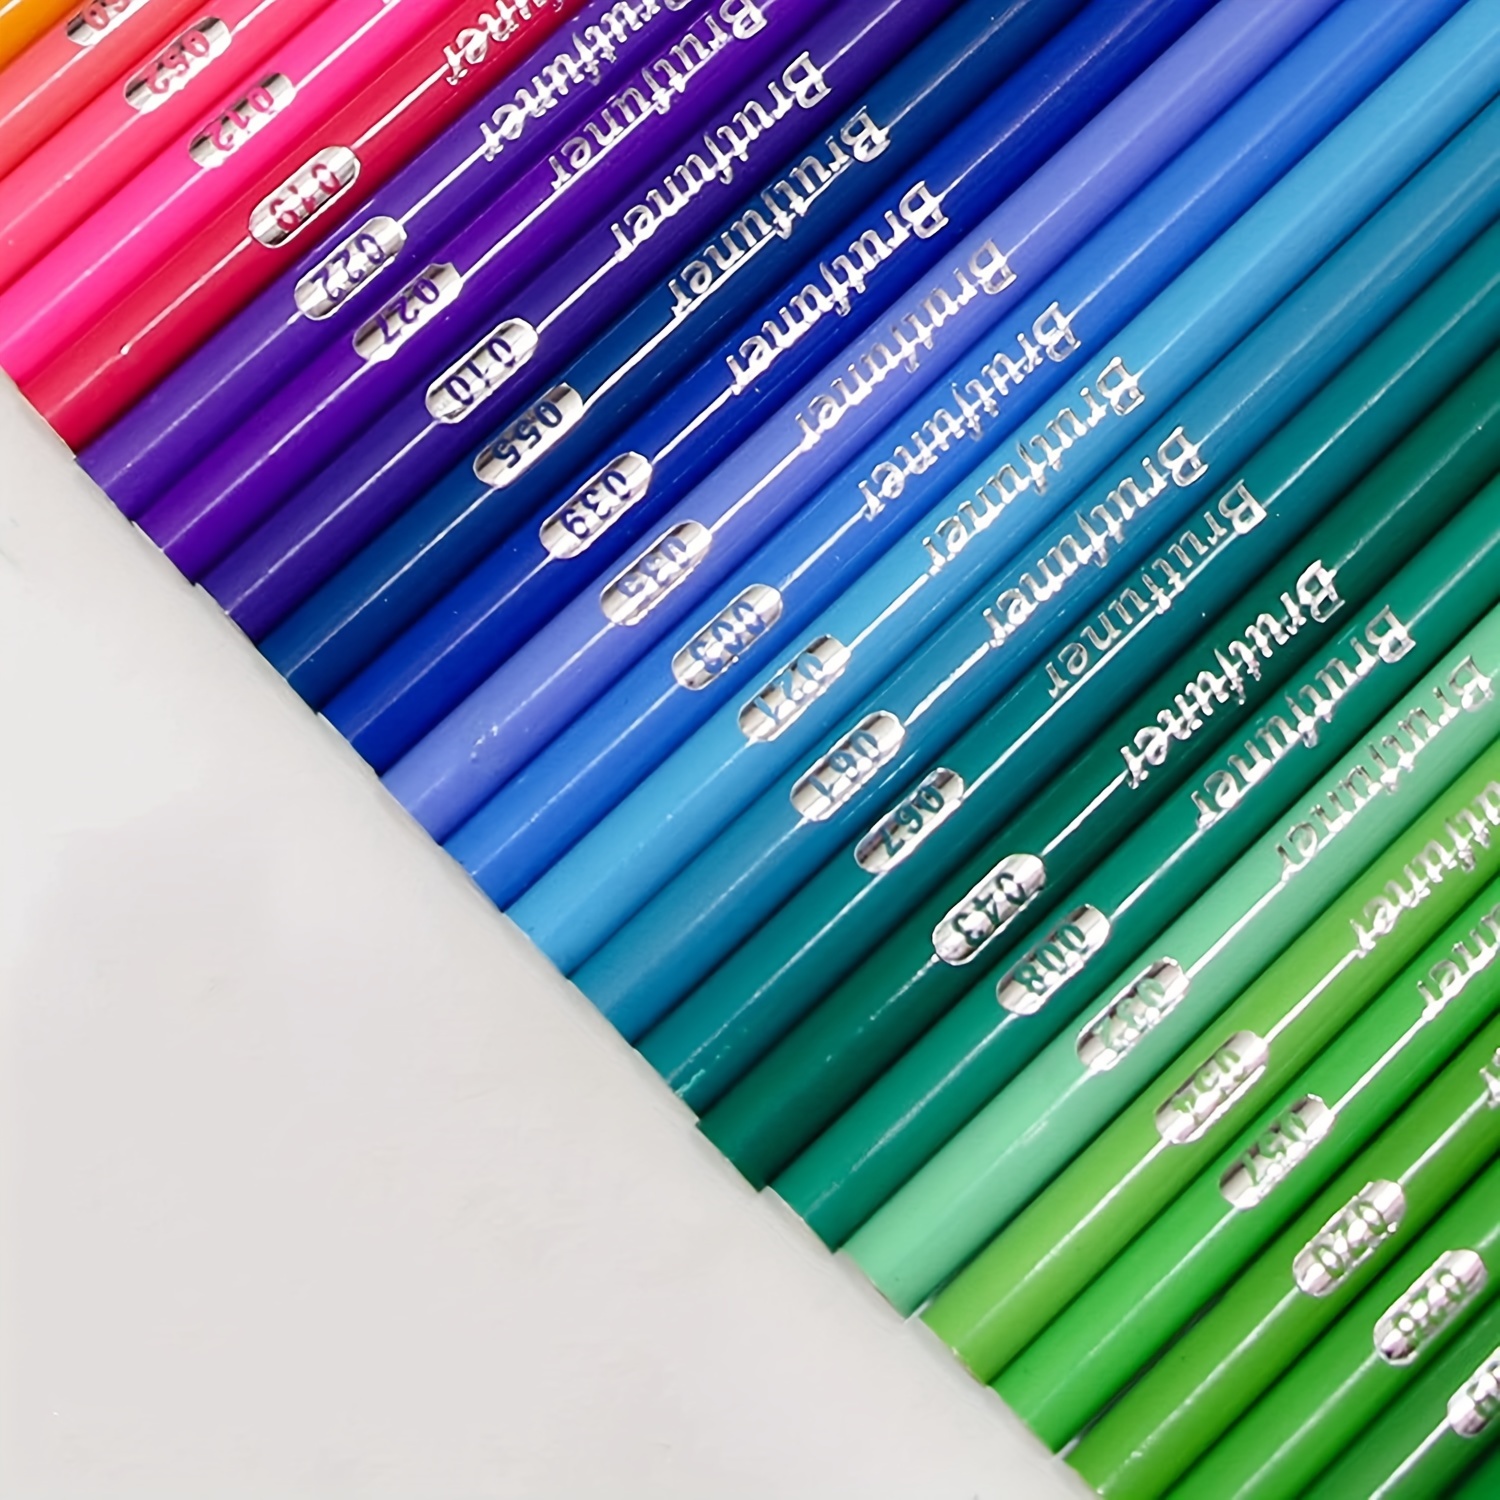 174 Colors Professional Colored Pencils, Soft Core Coloring